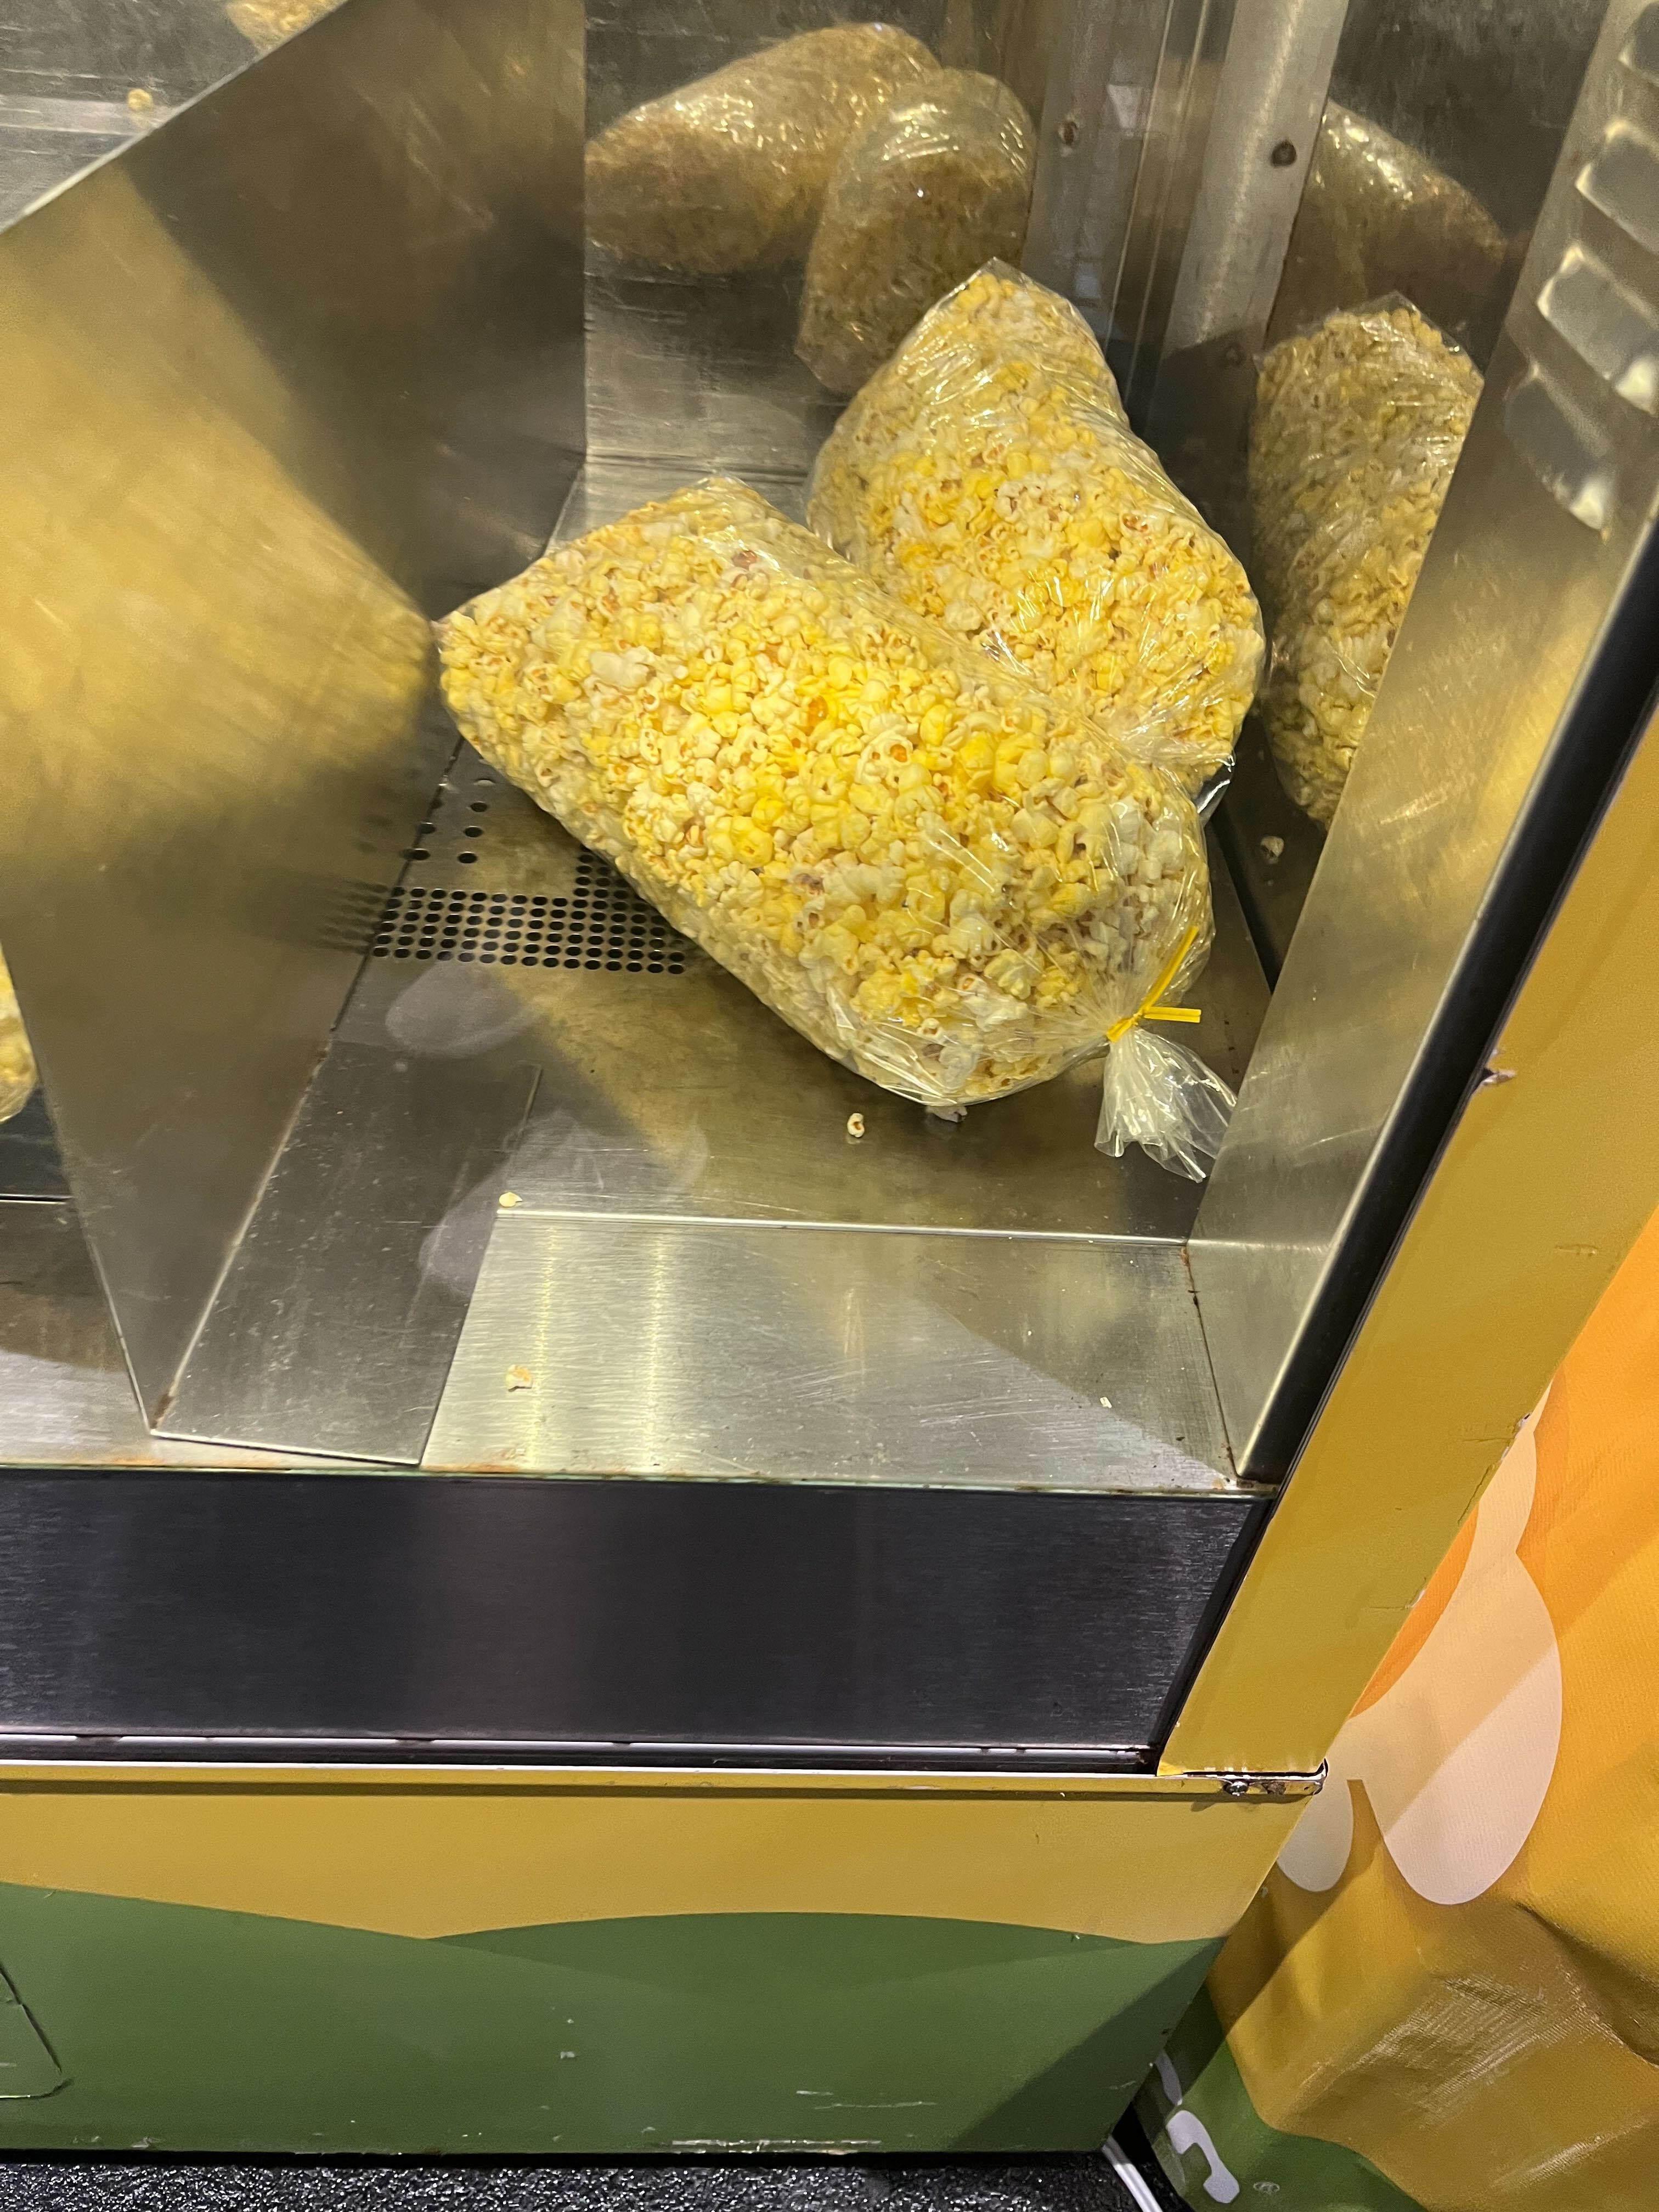 Some super salty pop corn. 